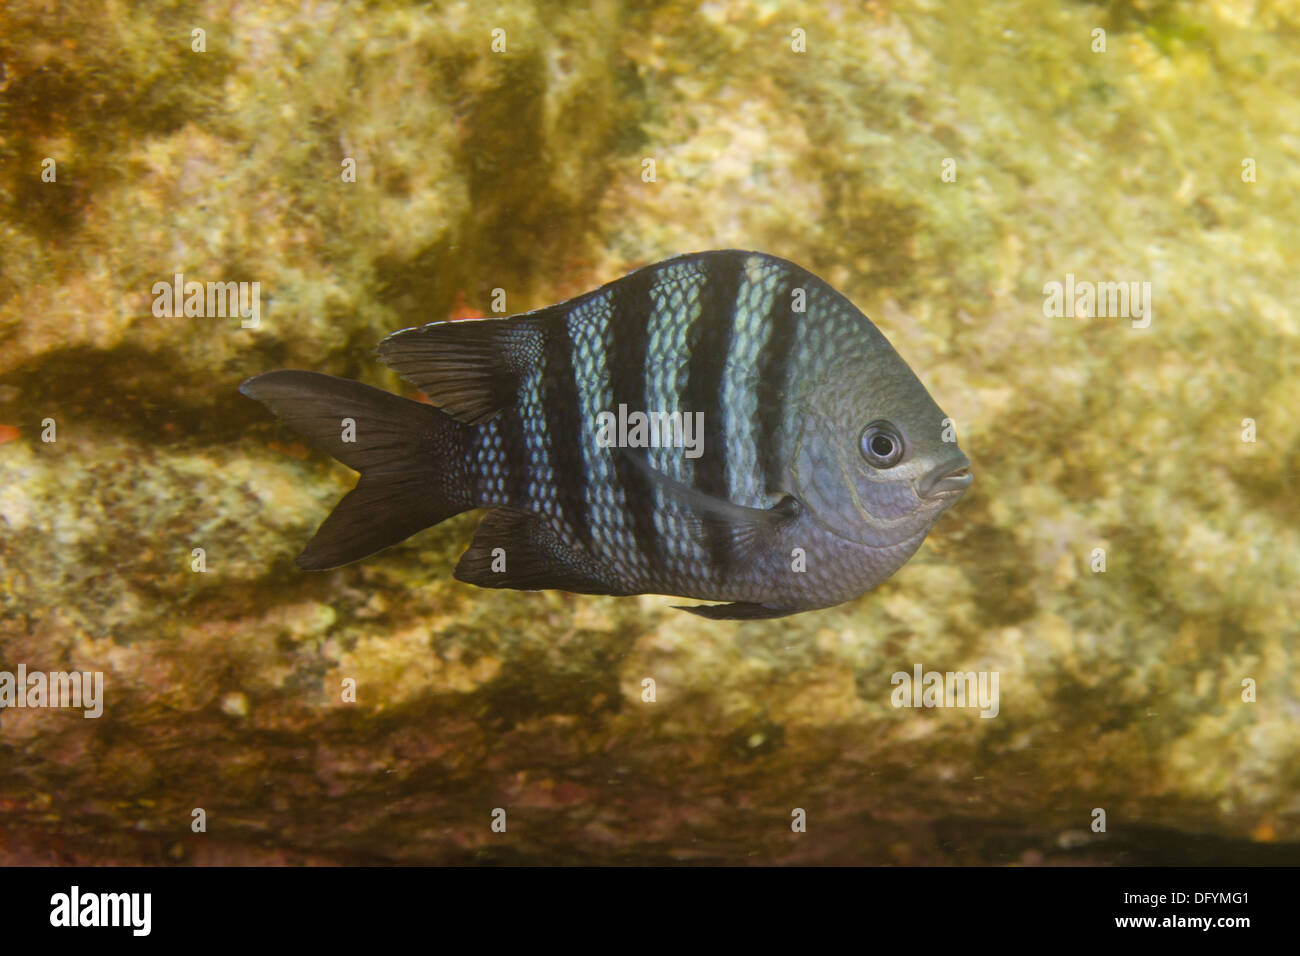 sergeant-major soldier reef fish portrait Abudefduf saxatilis pomacentridae. Brazil Stock Photo